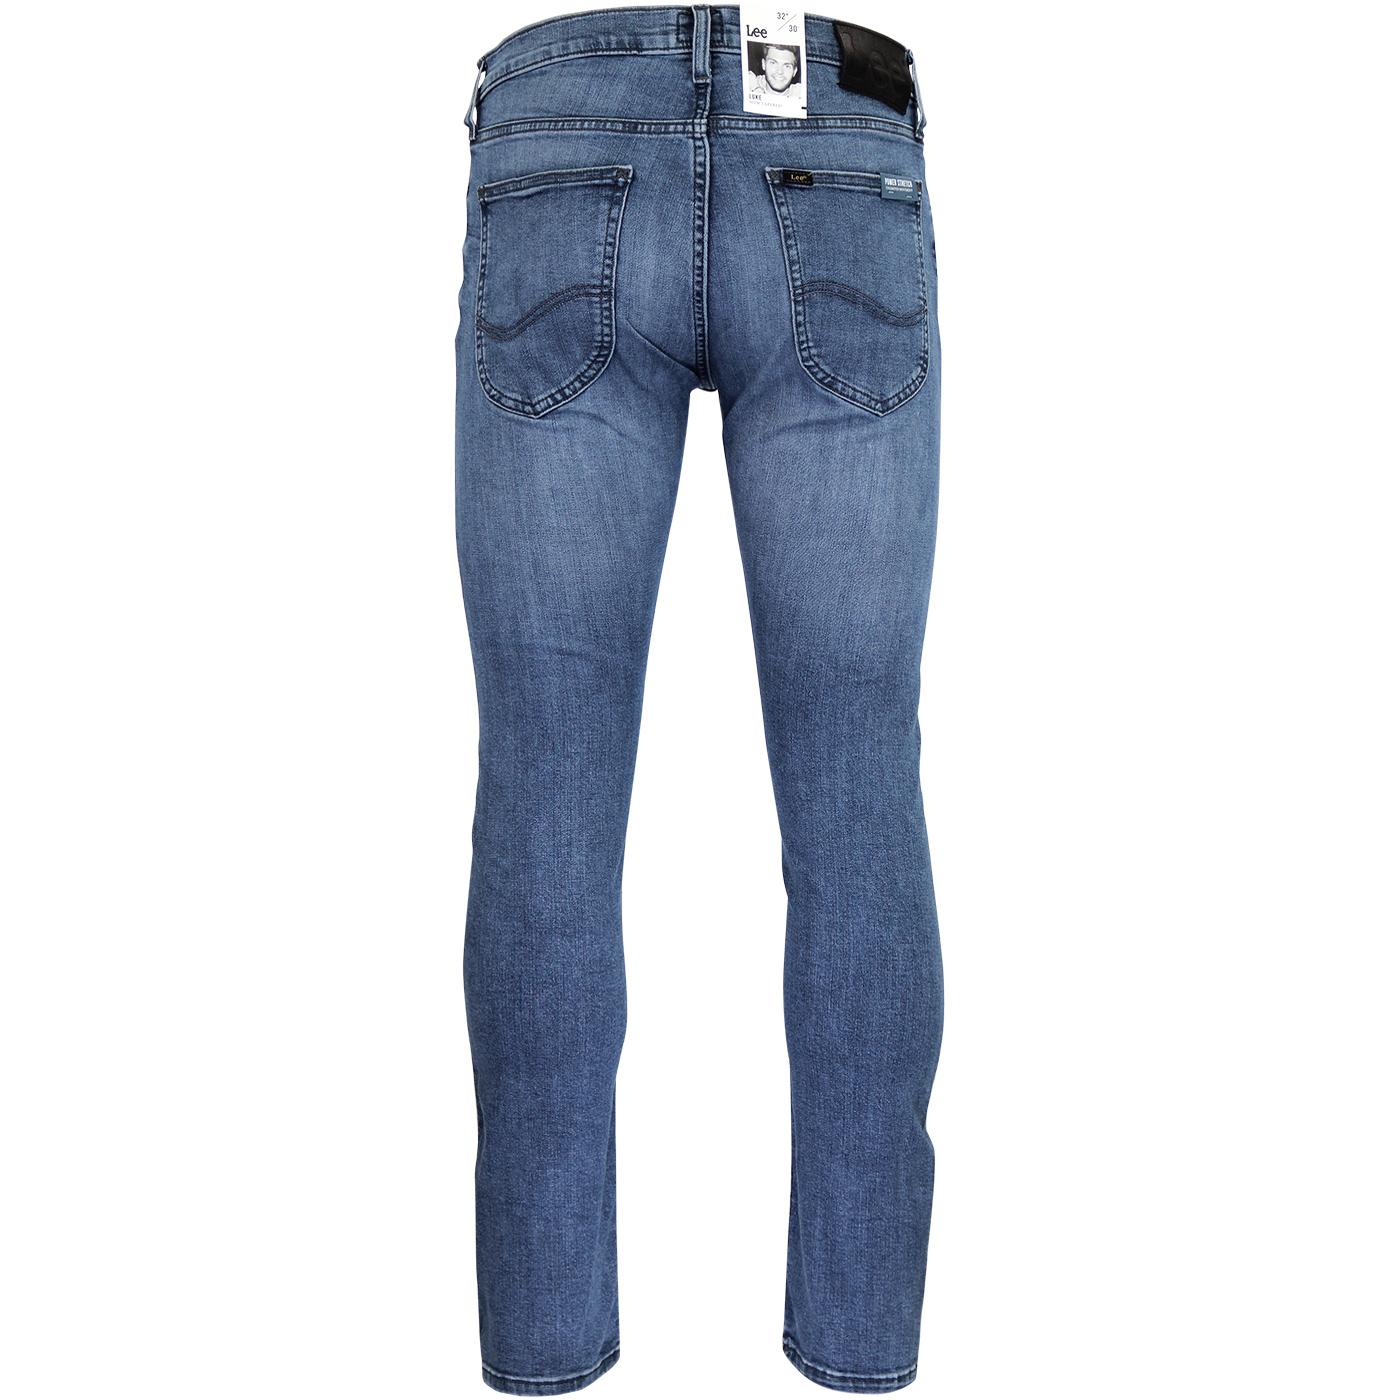 LEE JEANS Luke Retro Mod Slim Tapered Jeans in Minimal